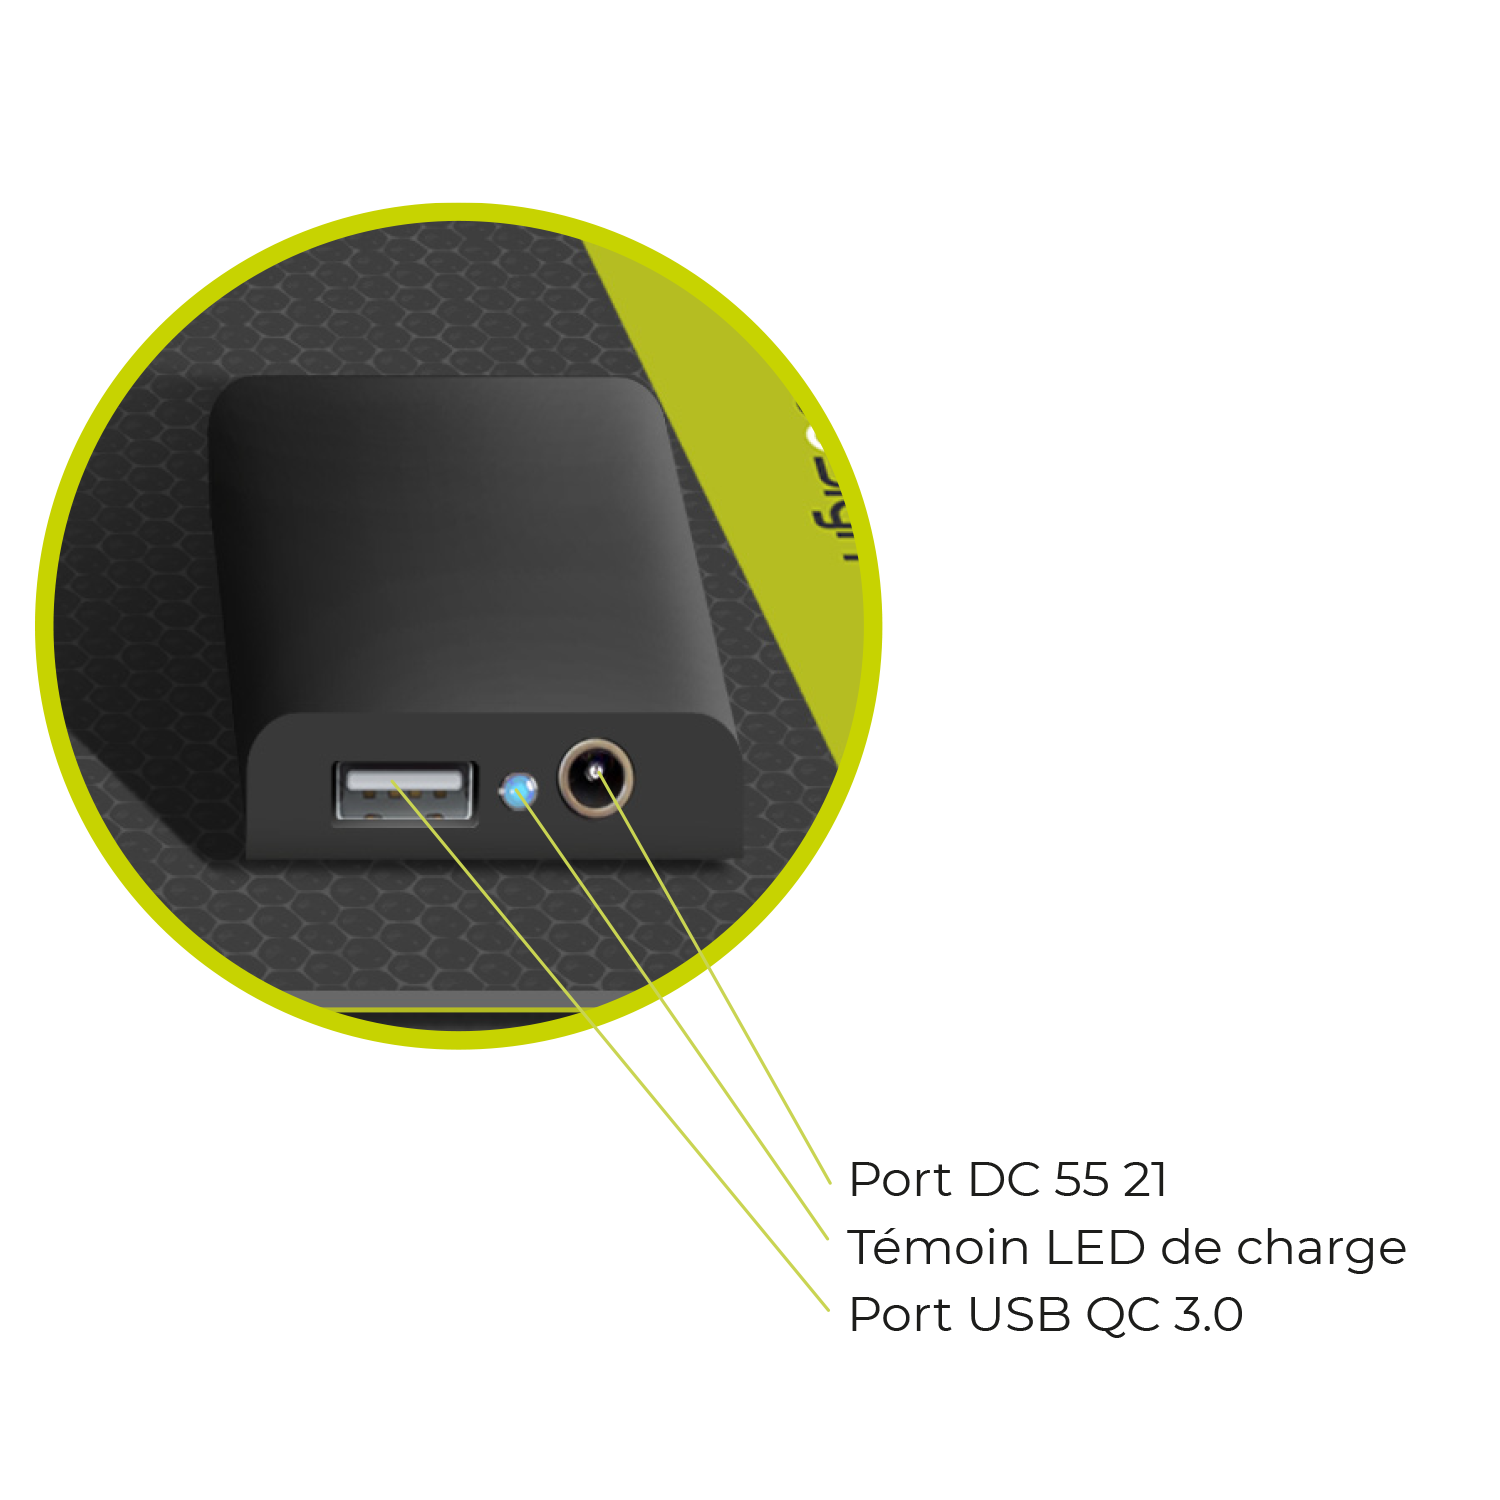 Port DC 55 21, Temoin LED de charge, Port USB QC 3.0